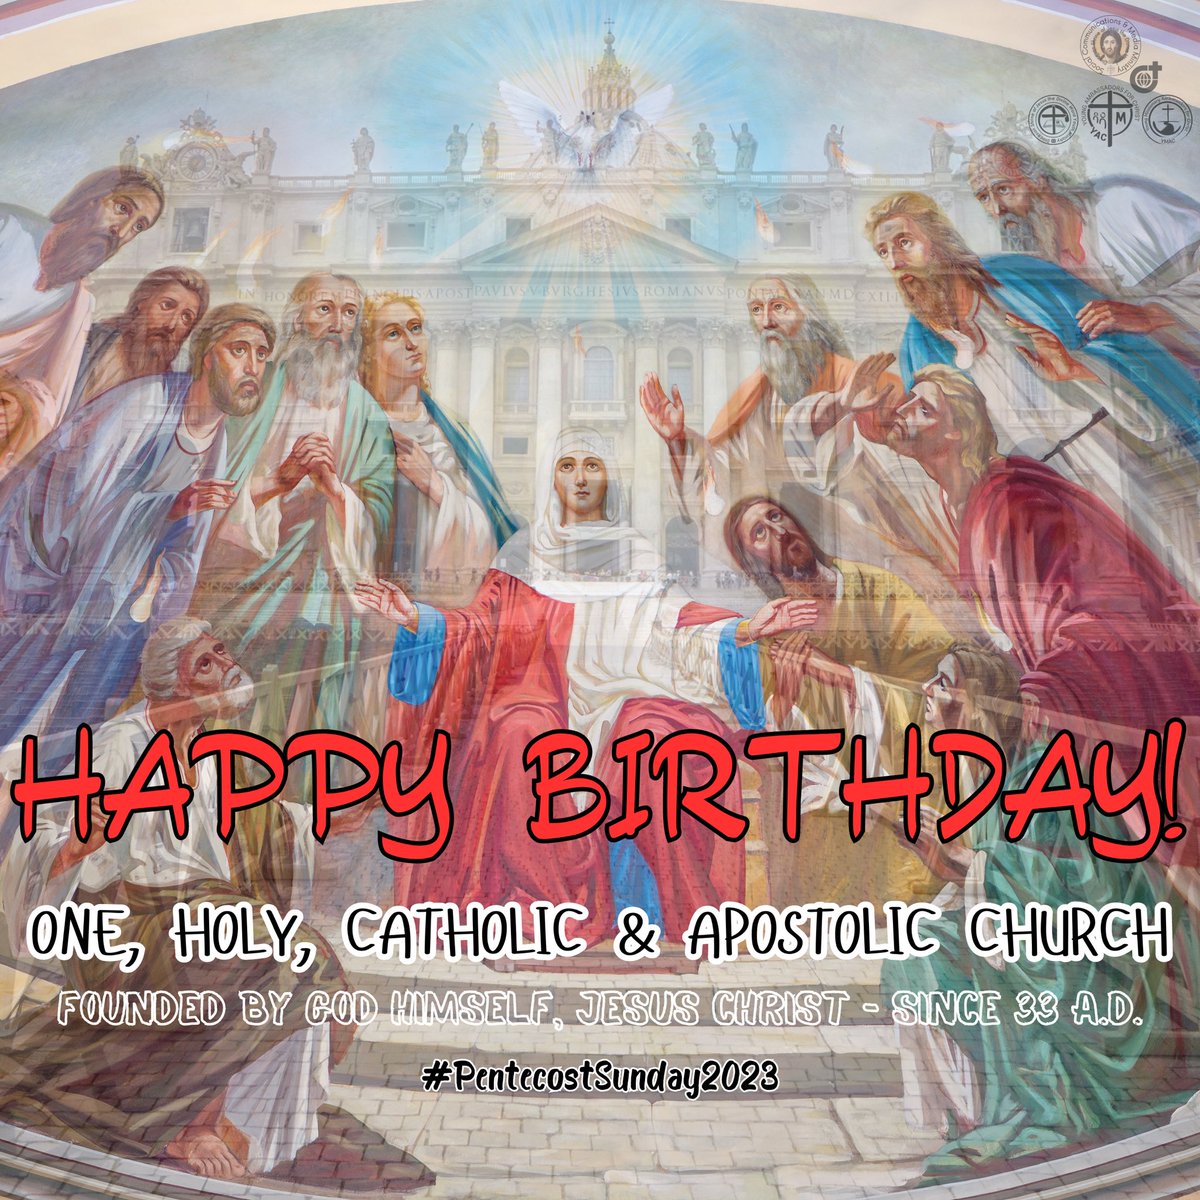 HAPPY BIRTHDAY!

ONE, HOLY CATHOLIC & APOSTOLIC CHURCH

FOUNDED BY GOD HIMSELF, JESUS CURIST - SINCE 33 A.D.

#PentecostSunday2023

#SVD #DSJDW #YAC #YMAC #SYM #SVDyouth #HolySpiritCome!!!